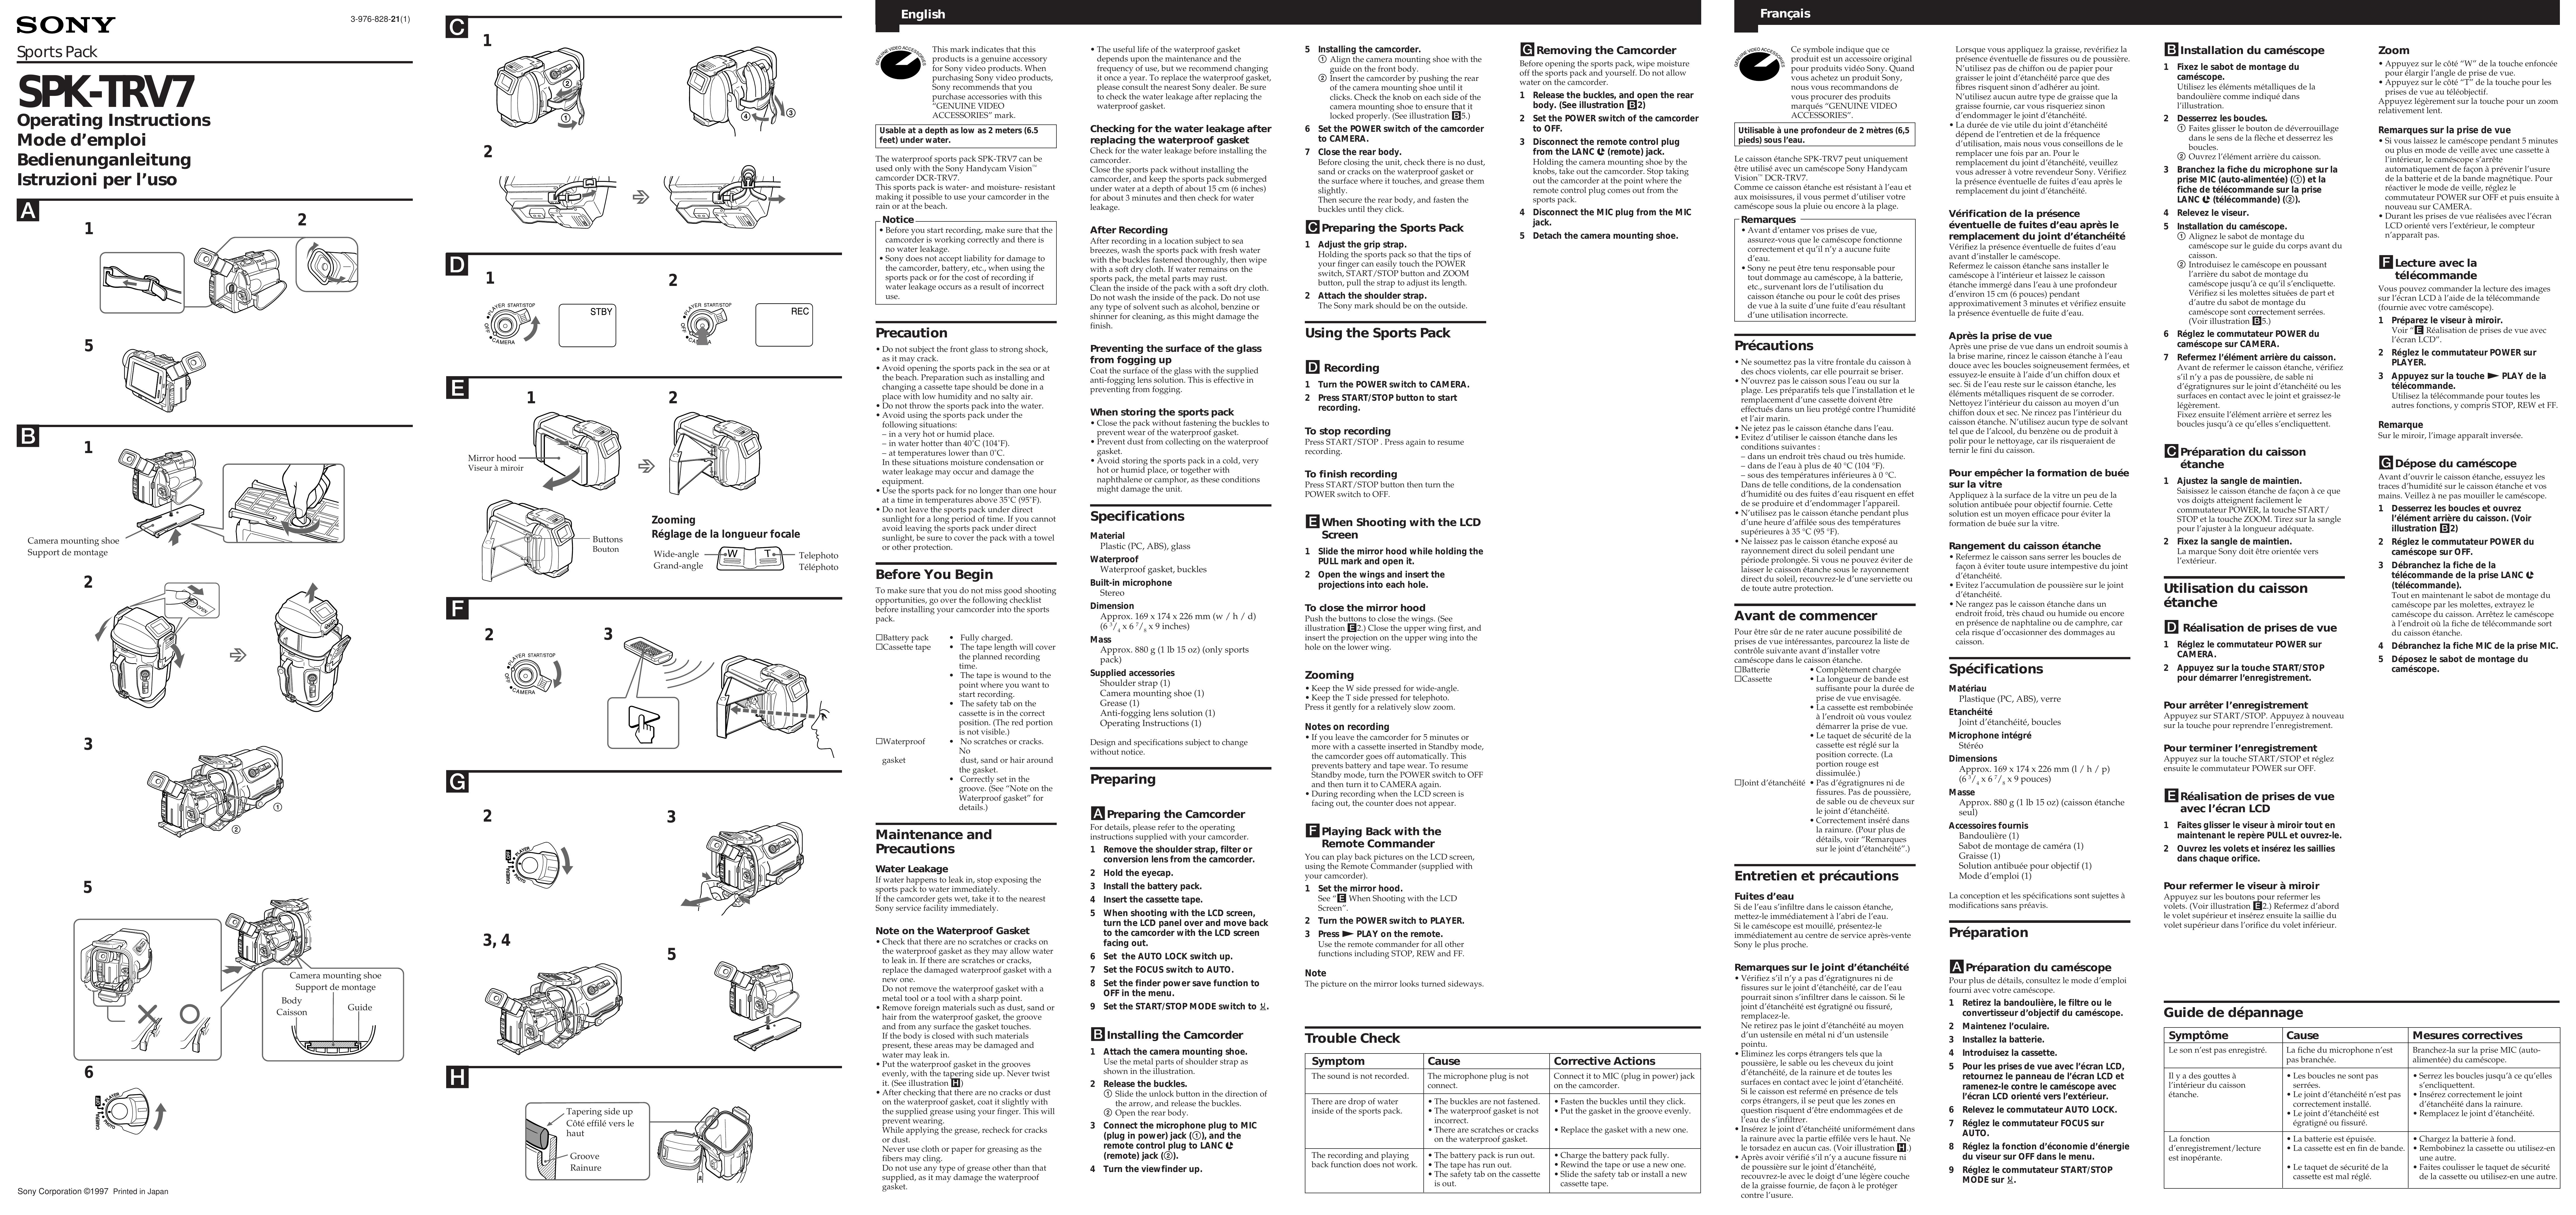 Sony SPK-TRV7 Camcorder Accessories User Manual